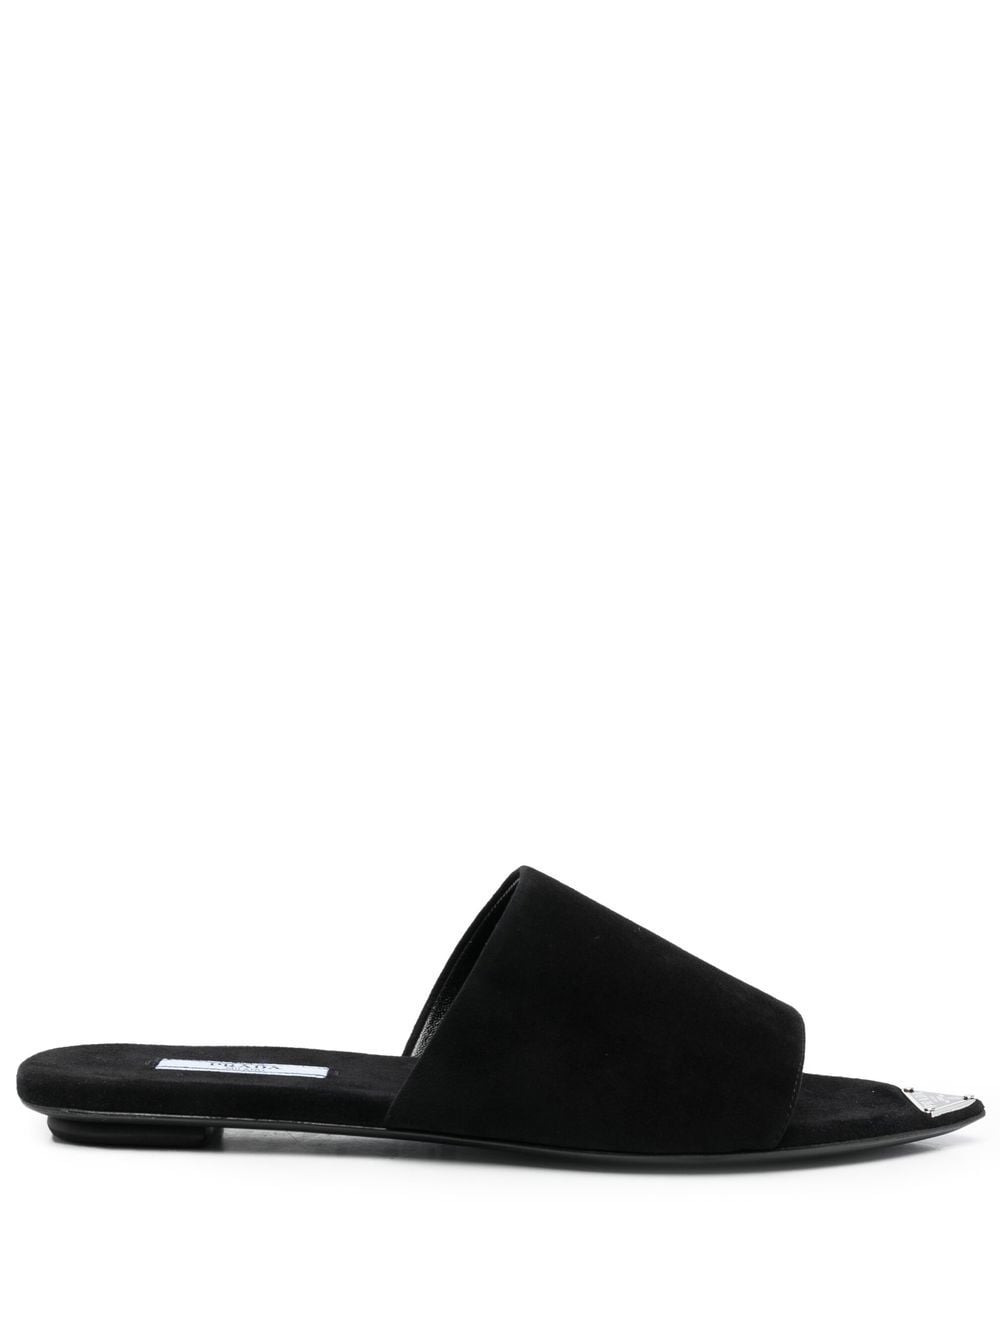 Prada flat leather sandals - Black